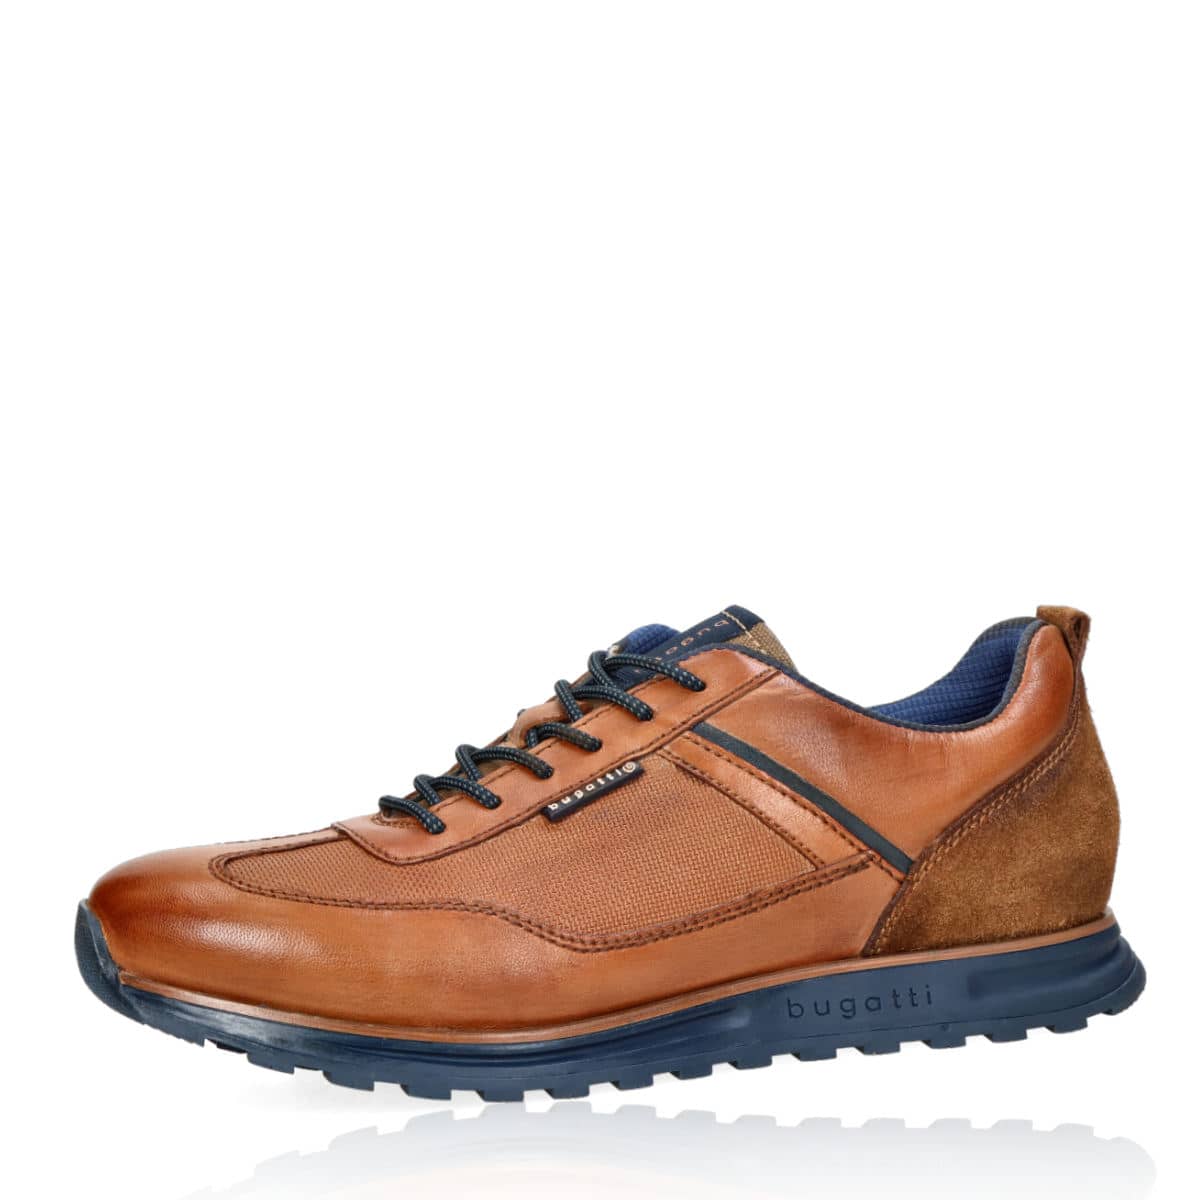 Bugatti men's leather sneaker - cognac brown | Robel.shoes